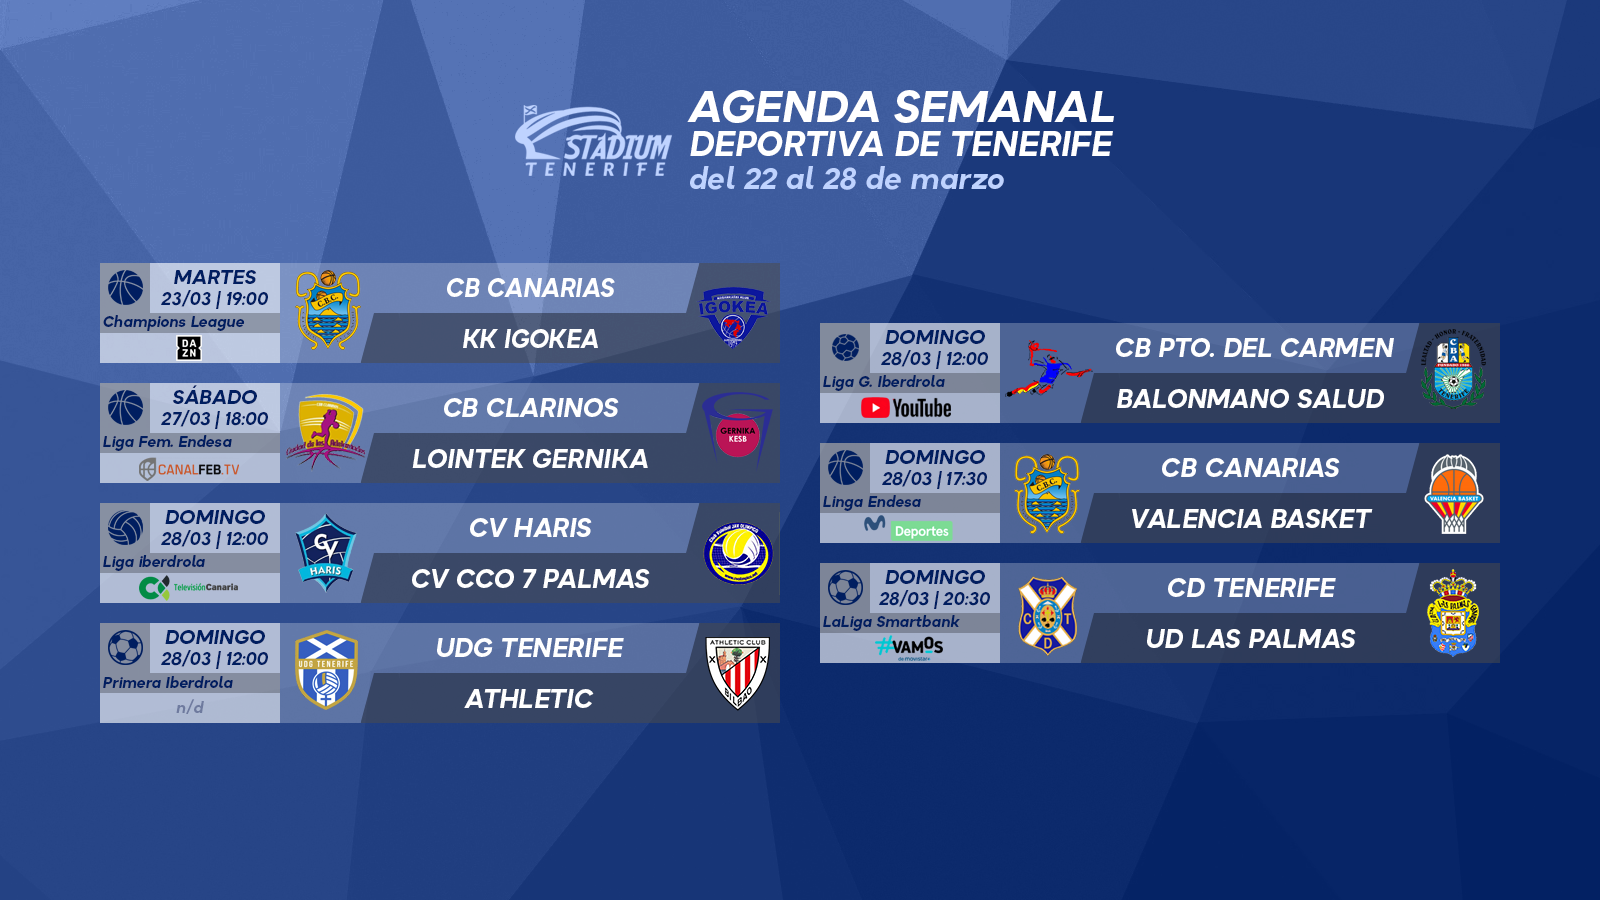 Agenda Semanal Deportiva de Tenerife (22 al 28 de marzo)